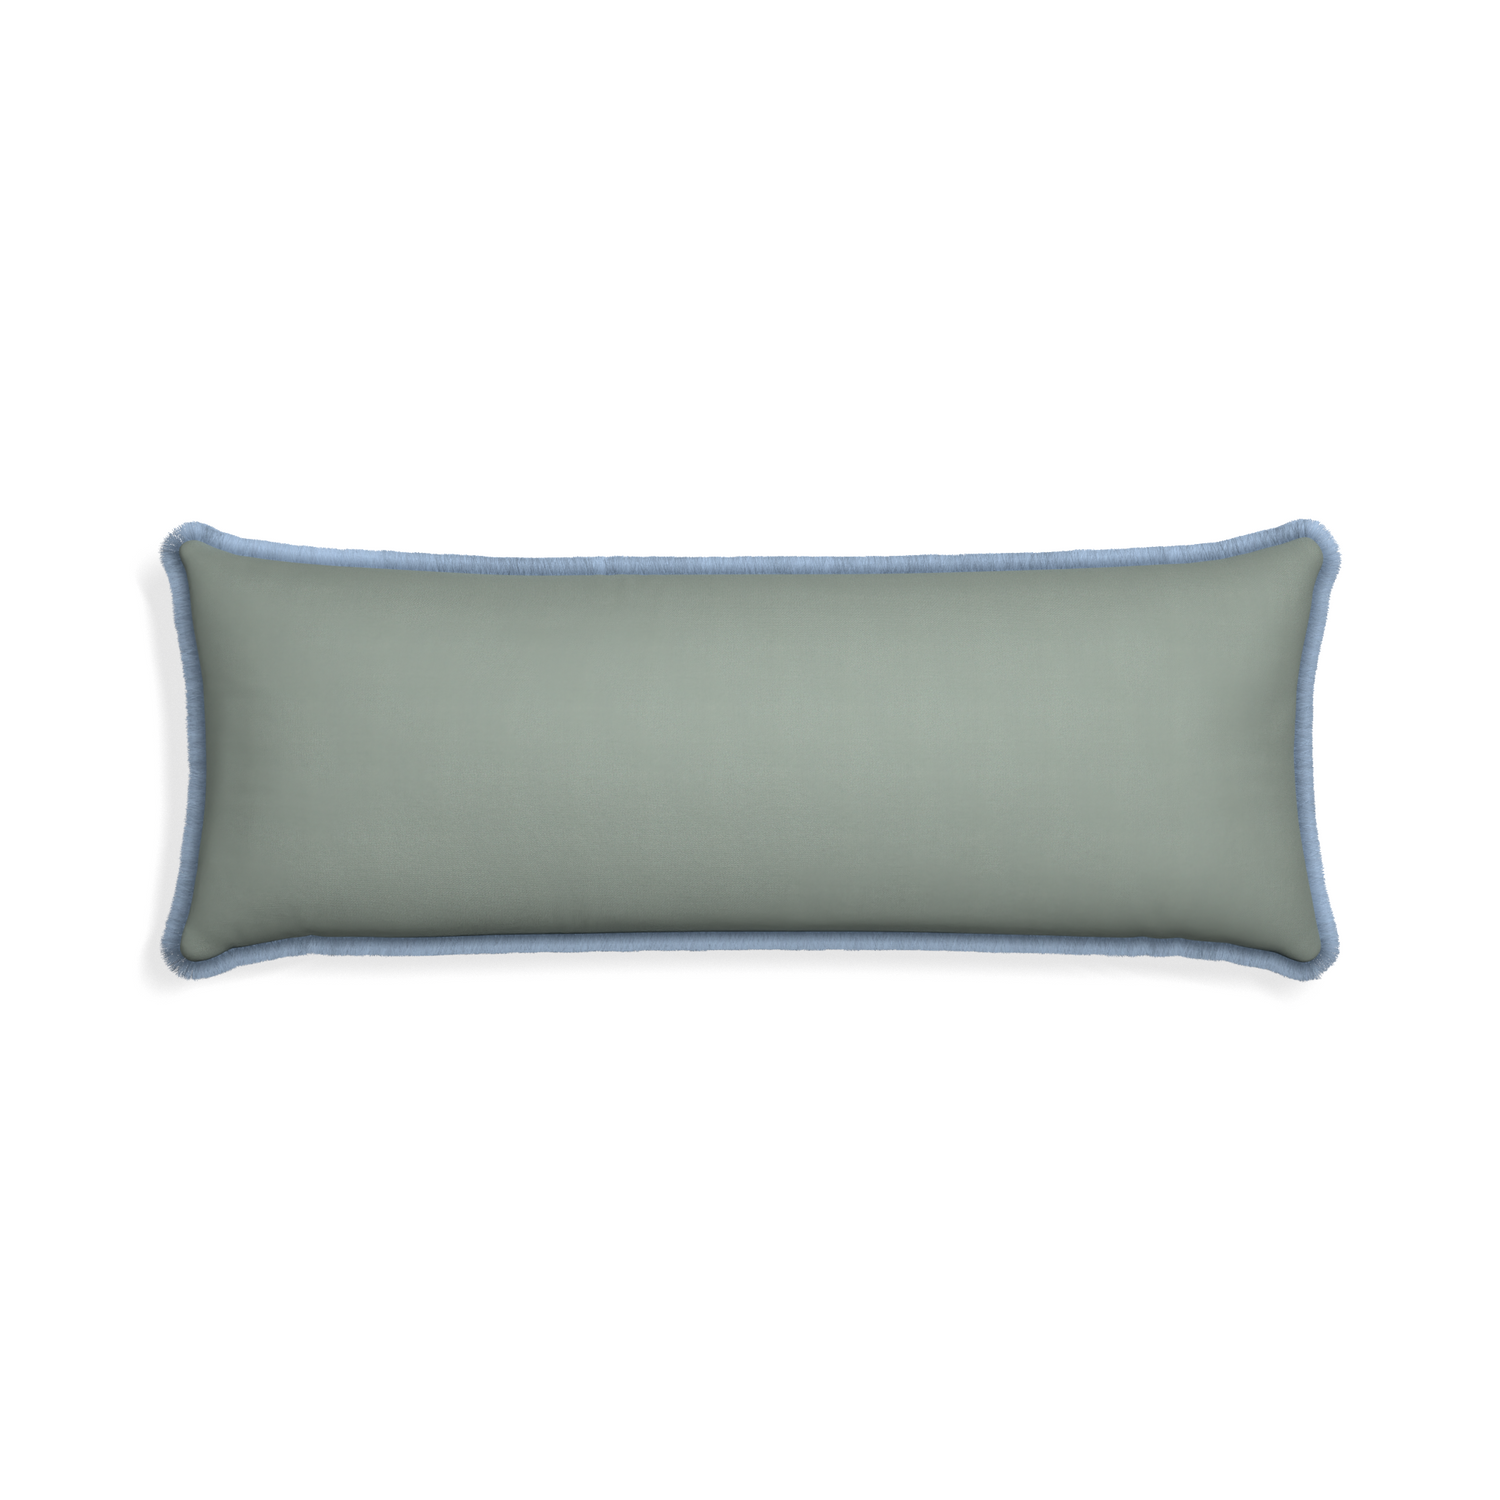 Xl-lumbar sage custom pillow with sky fringe on white background